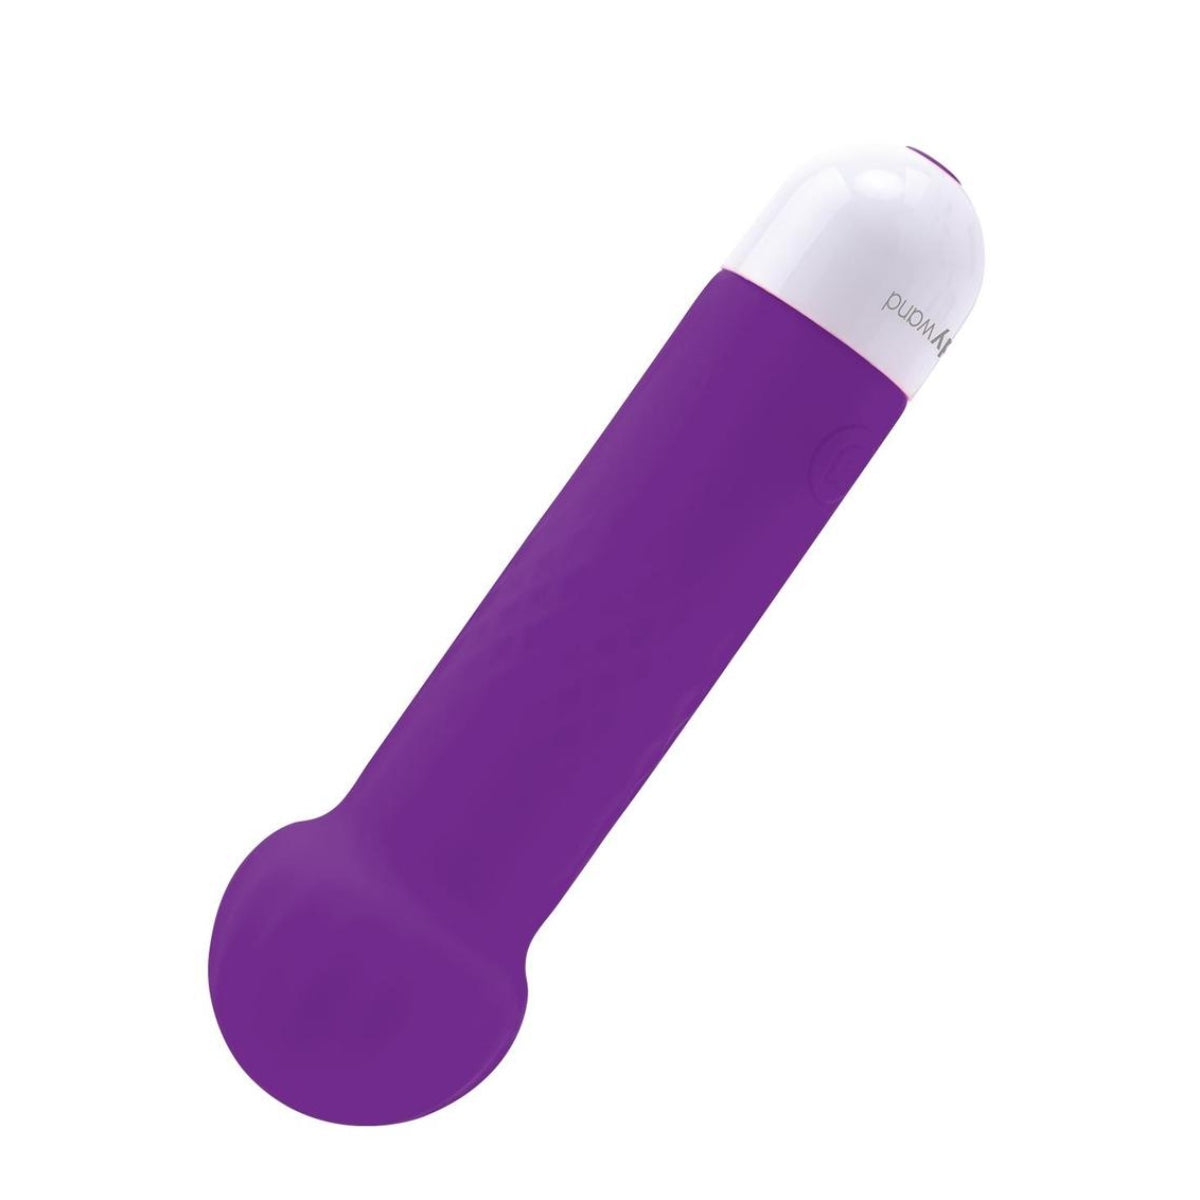 Bodywand Neon Mini Vibe Pocket Wand Vibrator Purple - Simply Pleasure